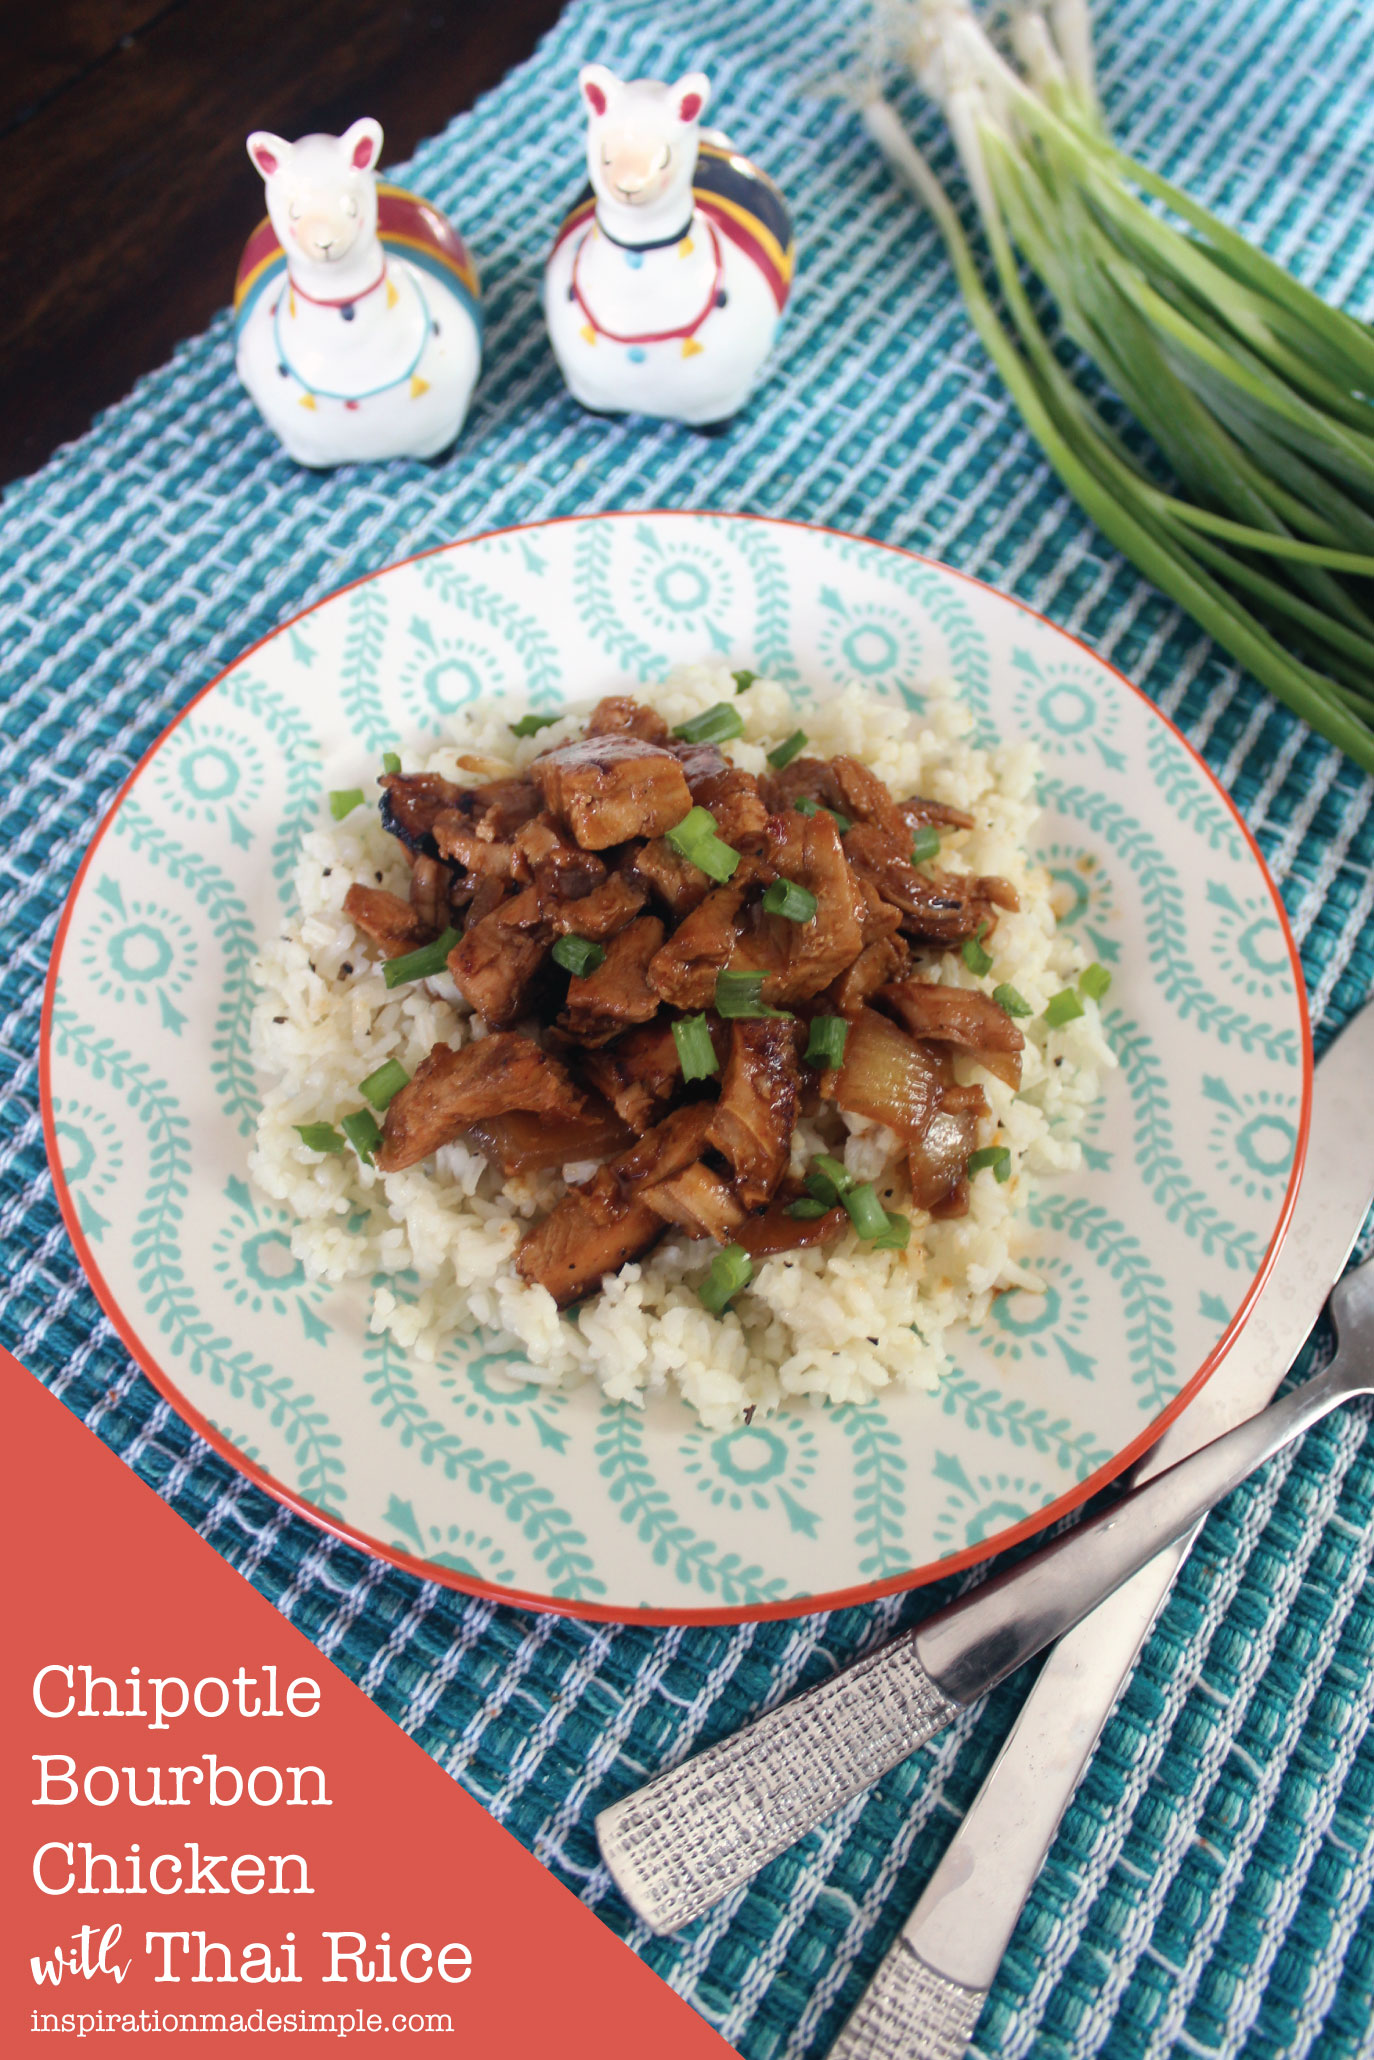 Chipotle Bourbon Chicken with Thai Rice